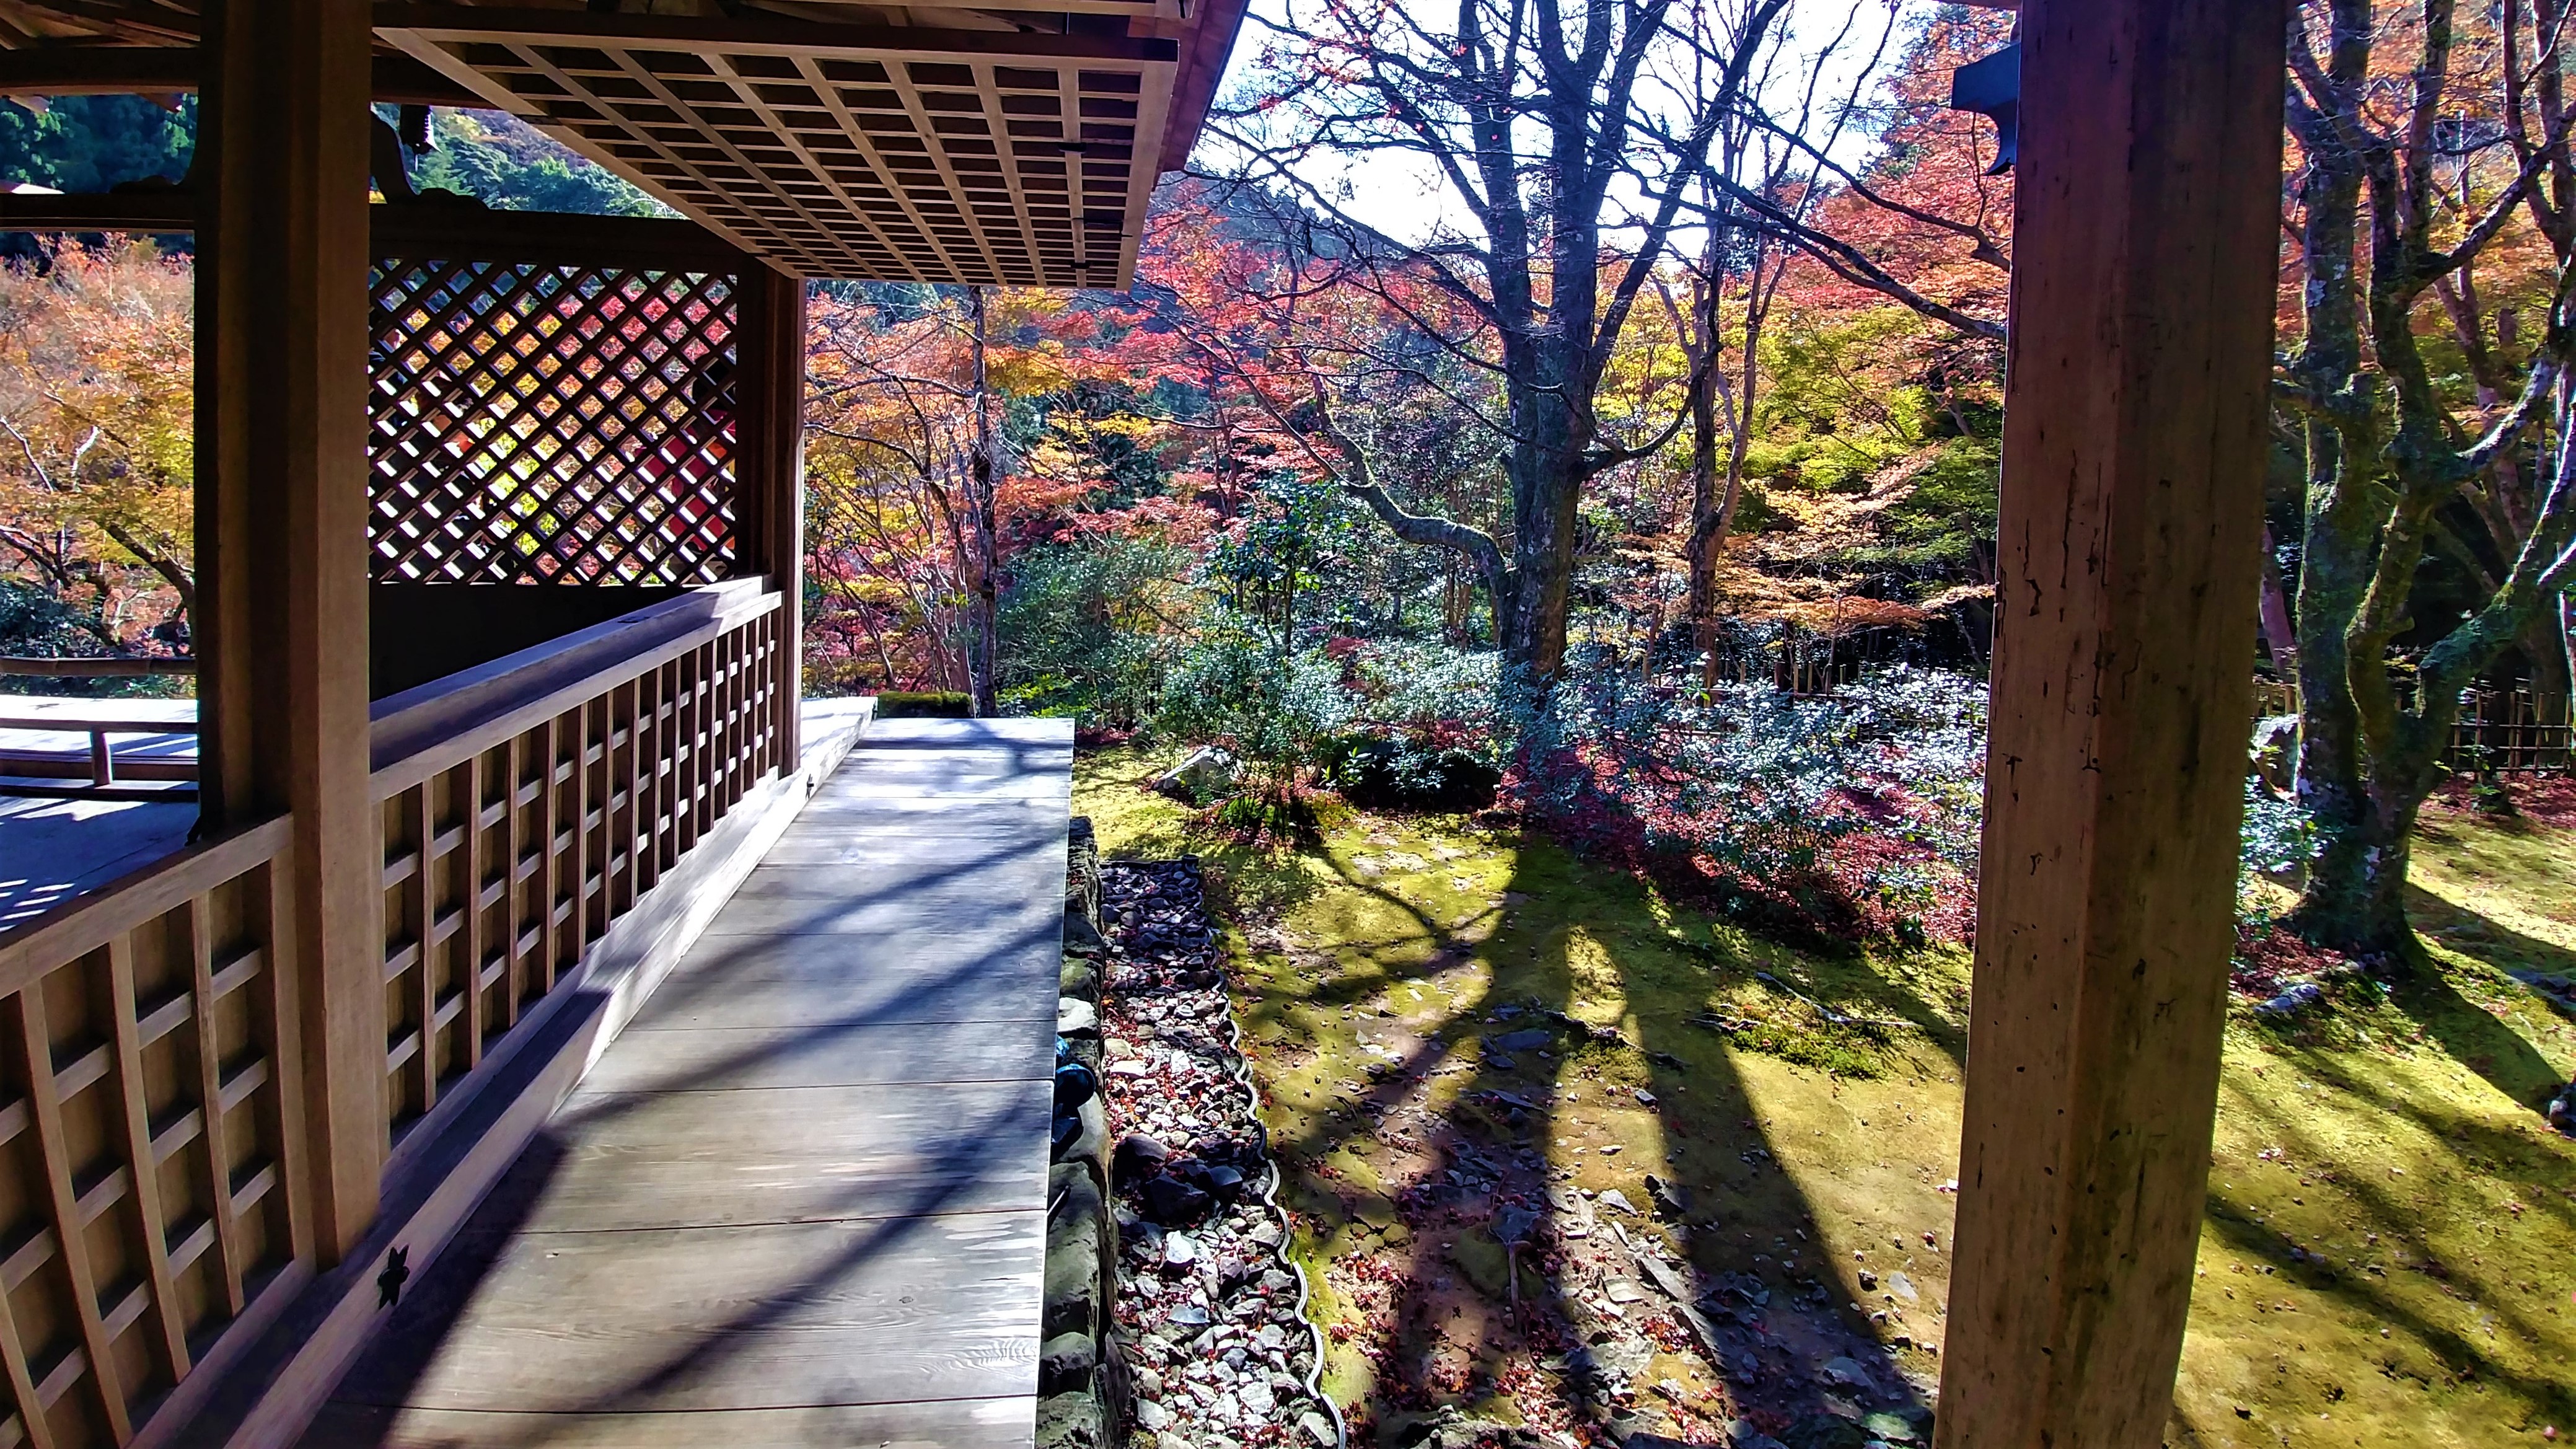 Kozan-ji Togano Kyoto visiter japon automne momiji blog voyage arpenter le chemin